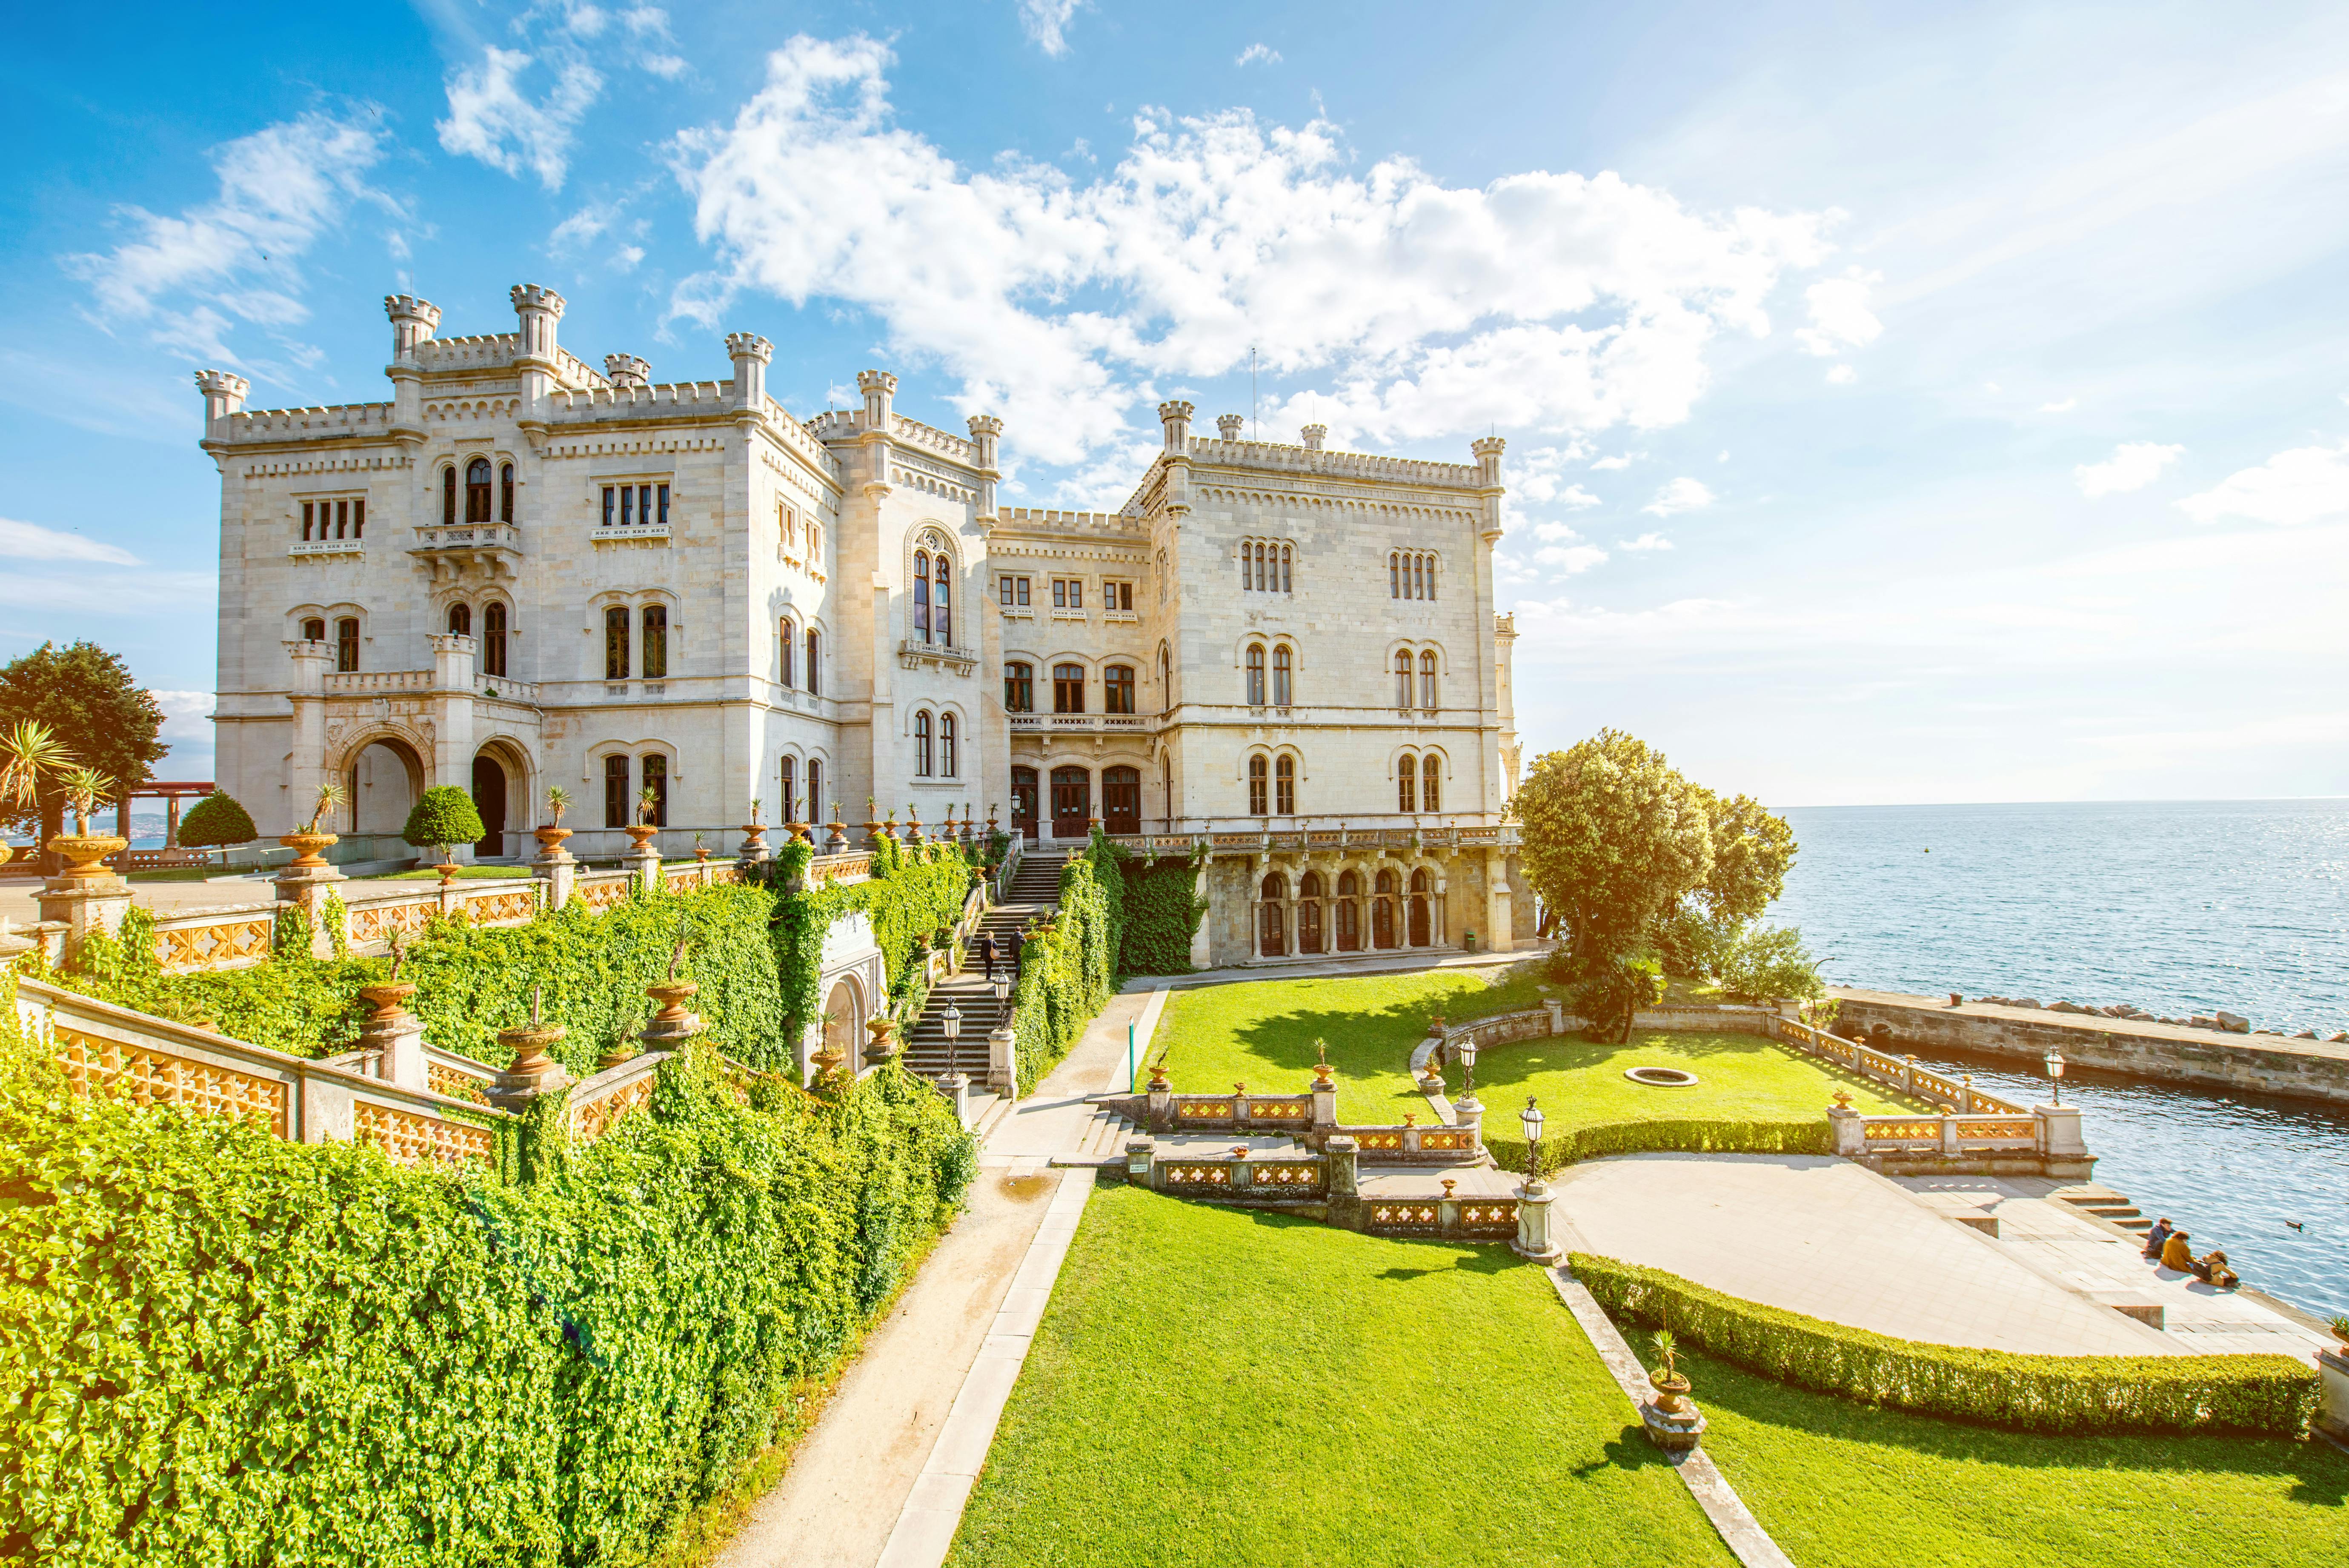 Tickets to Miramare Castle in Trieste